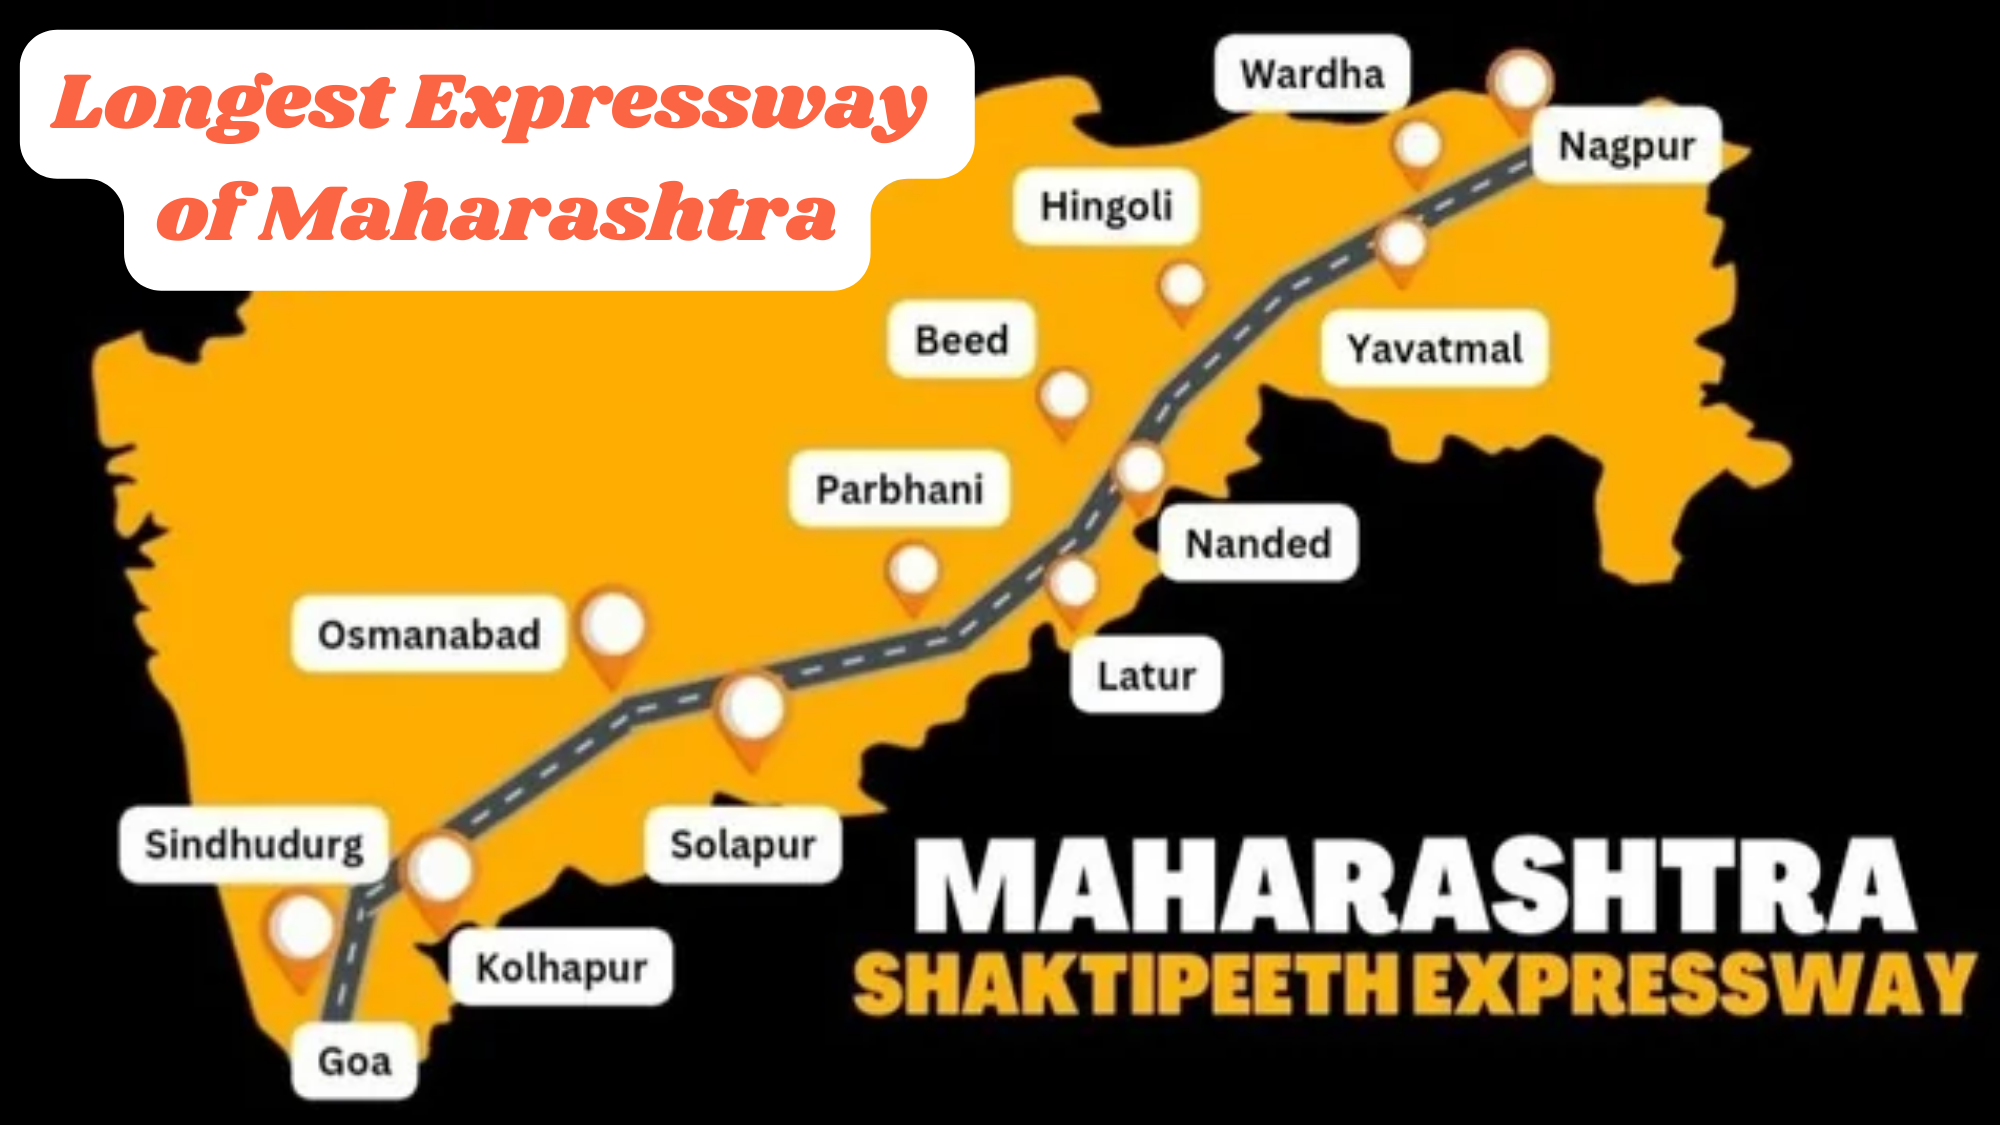 Longest expressway of Maharashtra Shaktipeeth will be a Game?